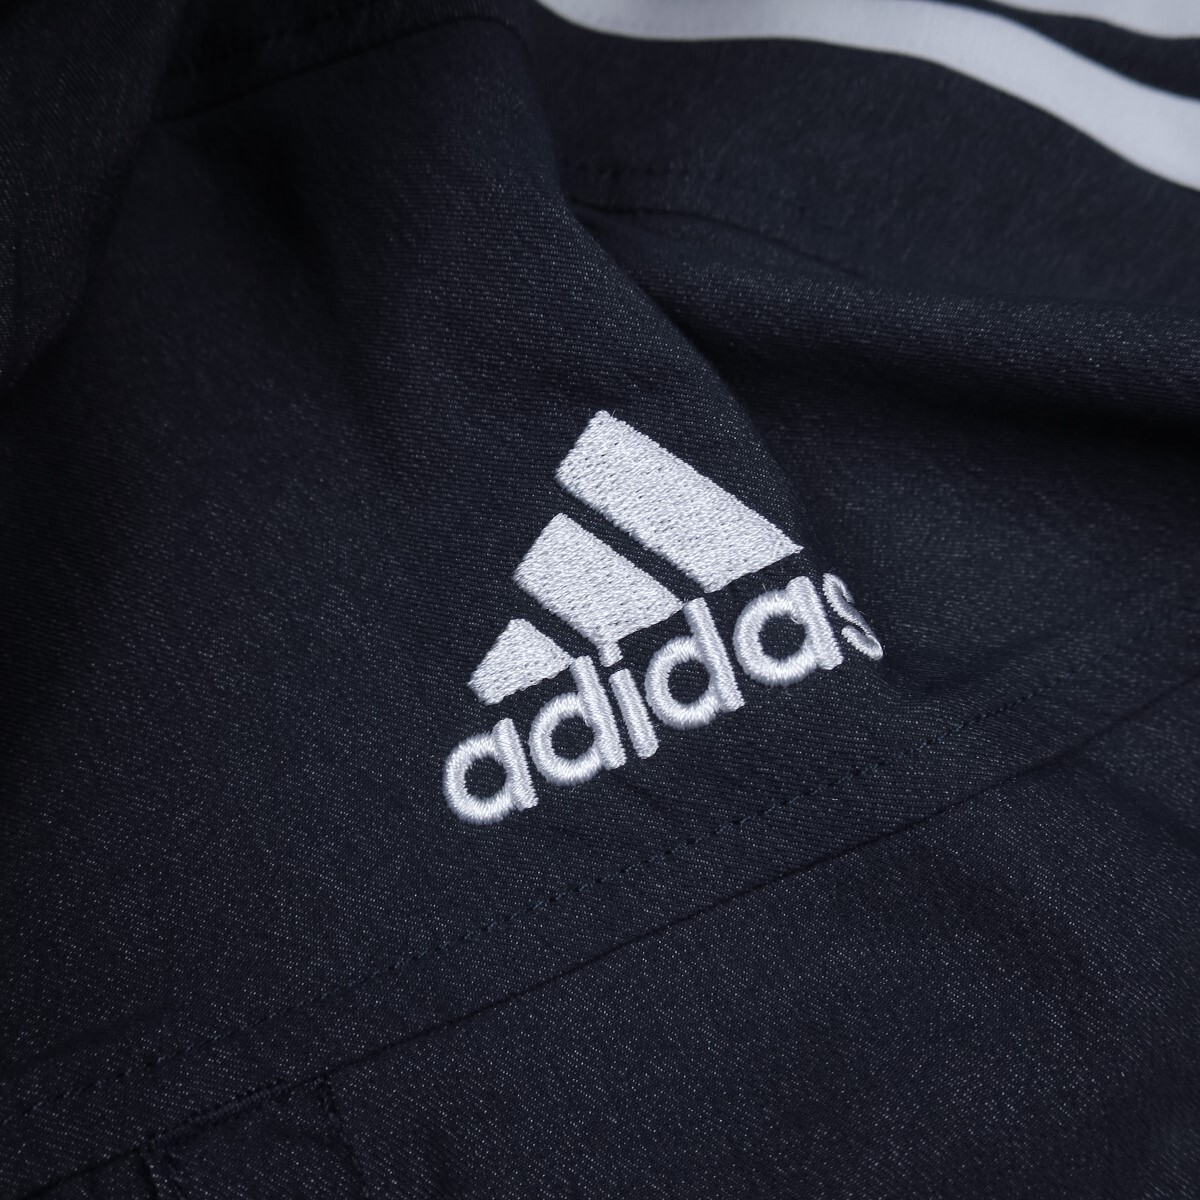  новый товар * Adidas /adidas/s Lee полоса s Denim Like ветровка F22/389 темно-синий /[L]